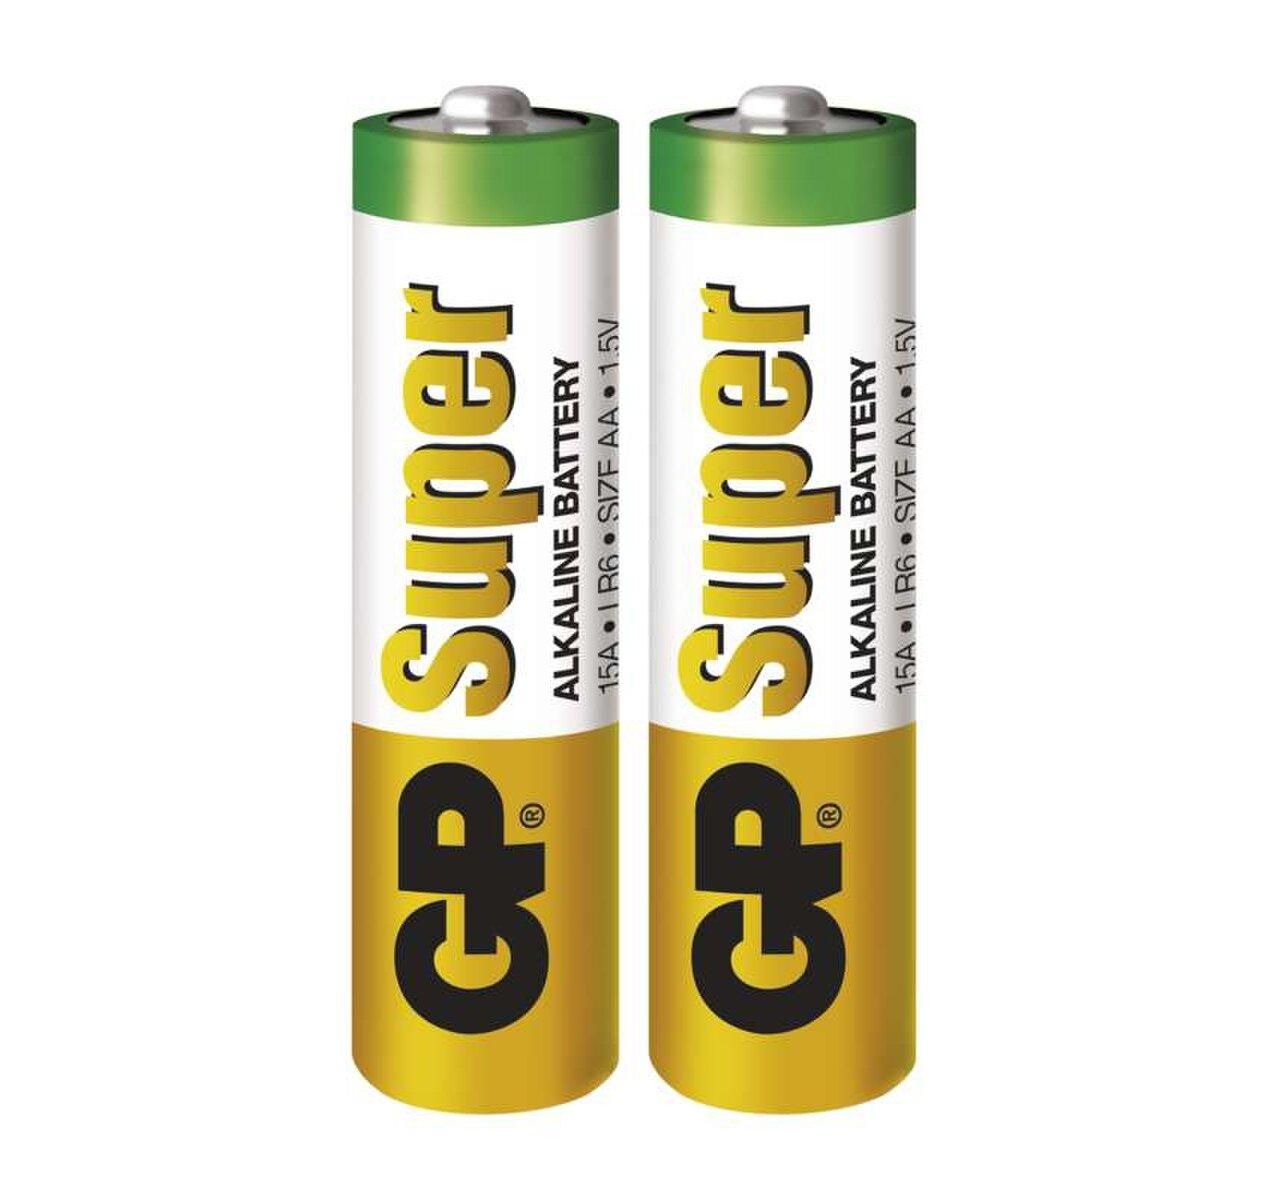 Batéria LR06 1,5V GP B1320  Super alkalická fólia 2ks                           